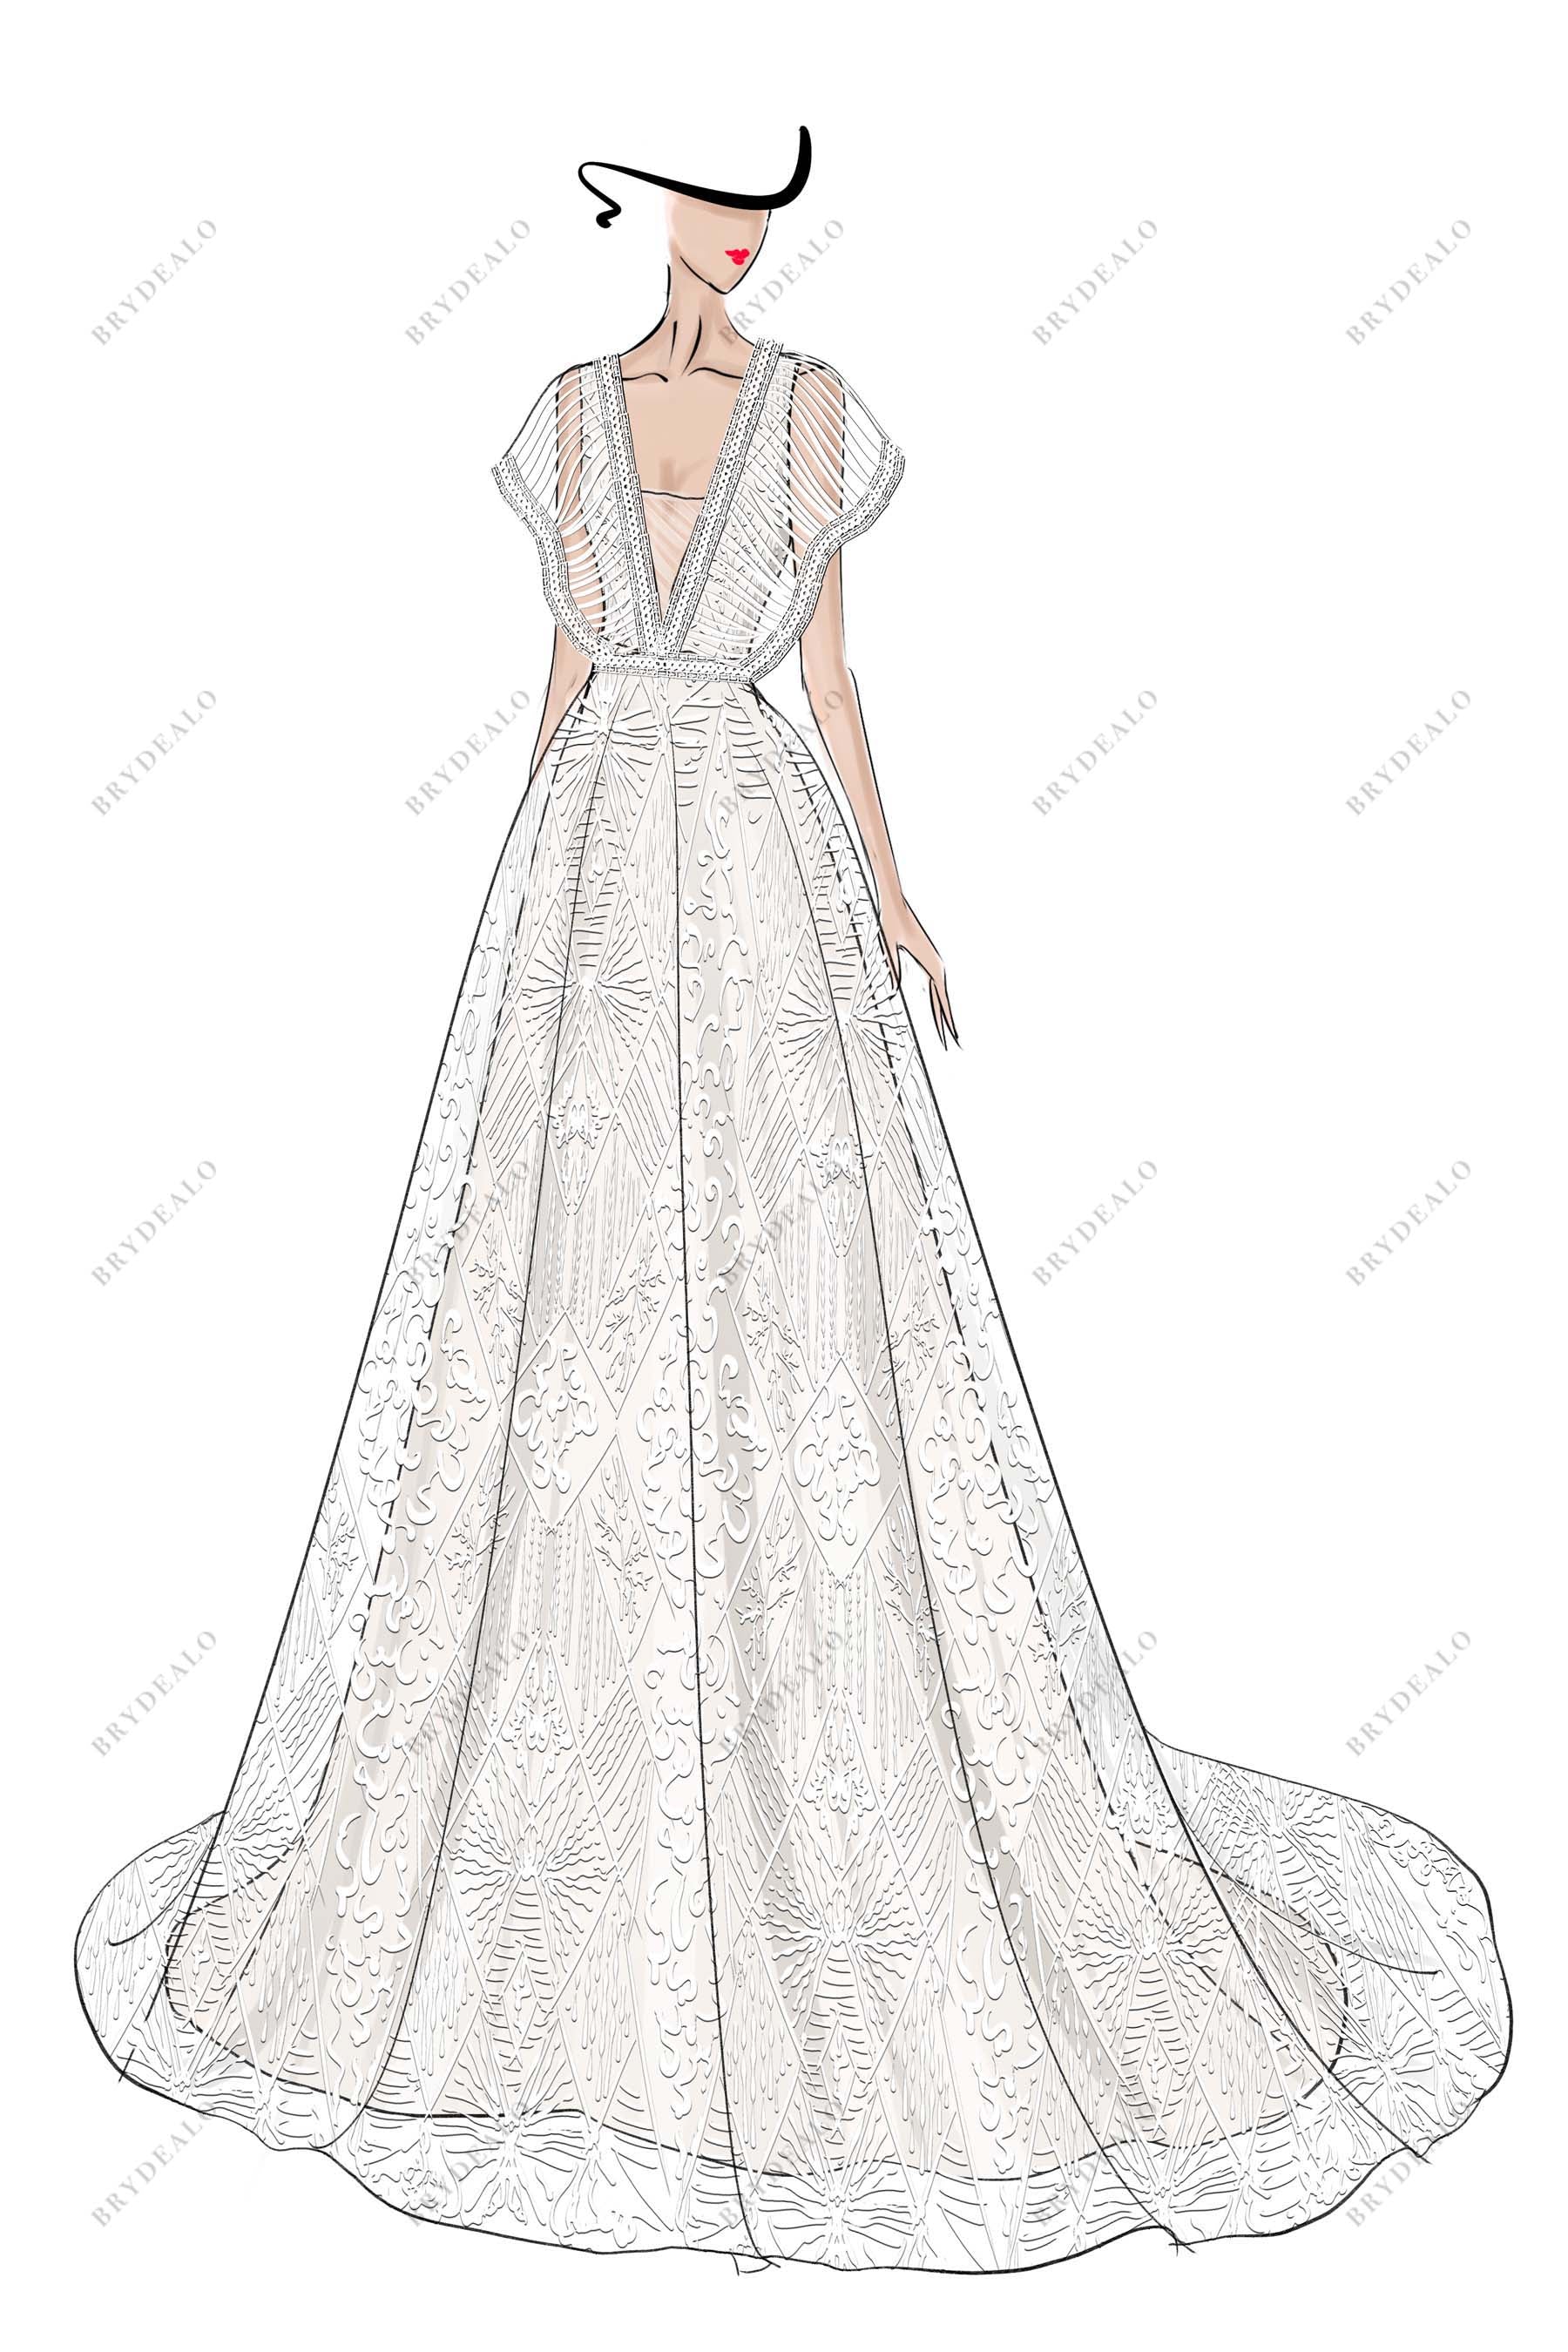 Boho Lace Plunging Neck A-line Wedding Dress Sketch